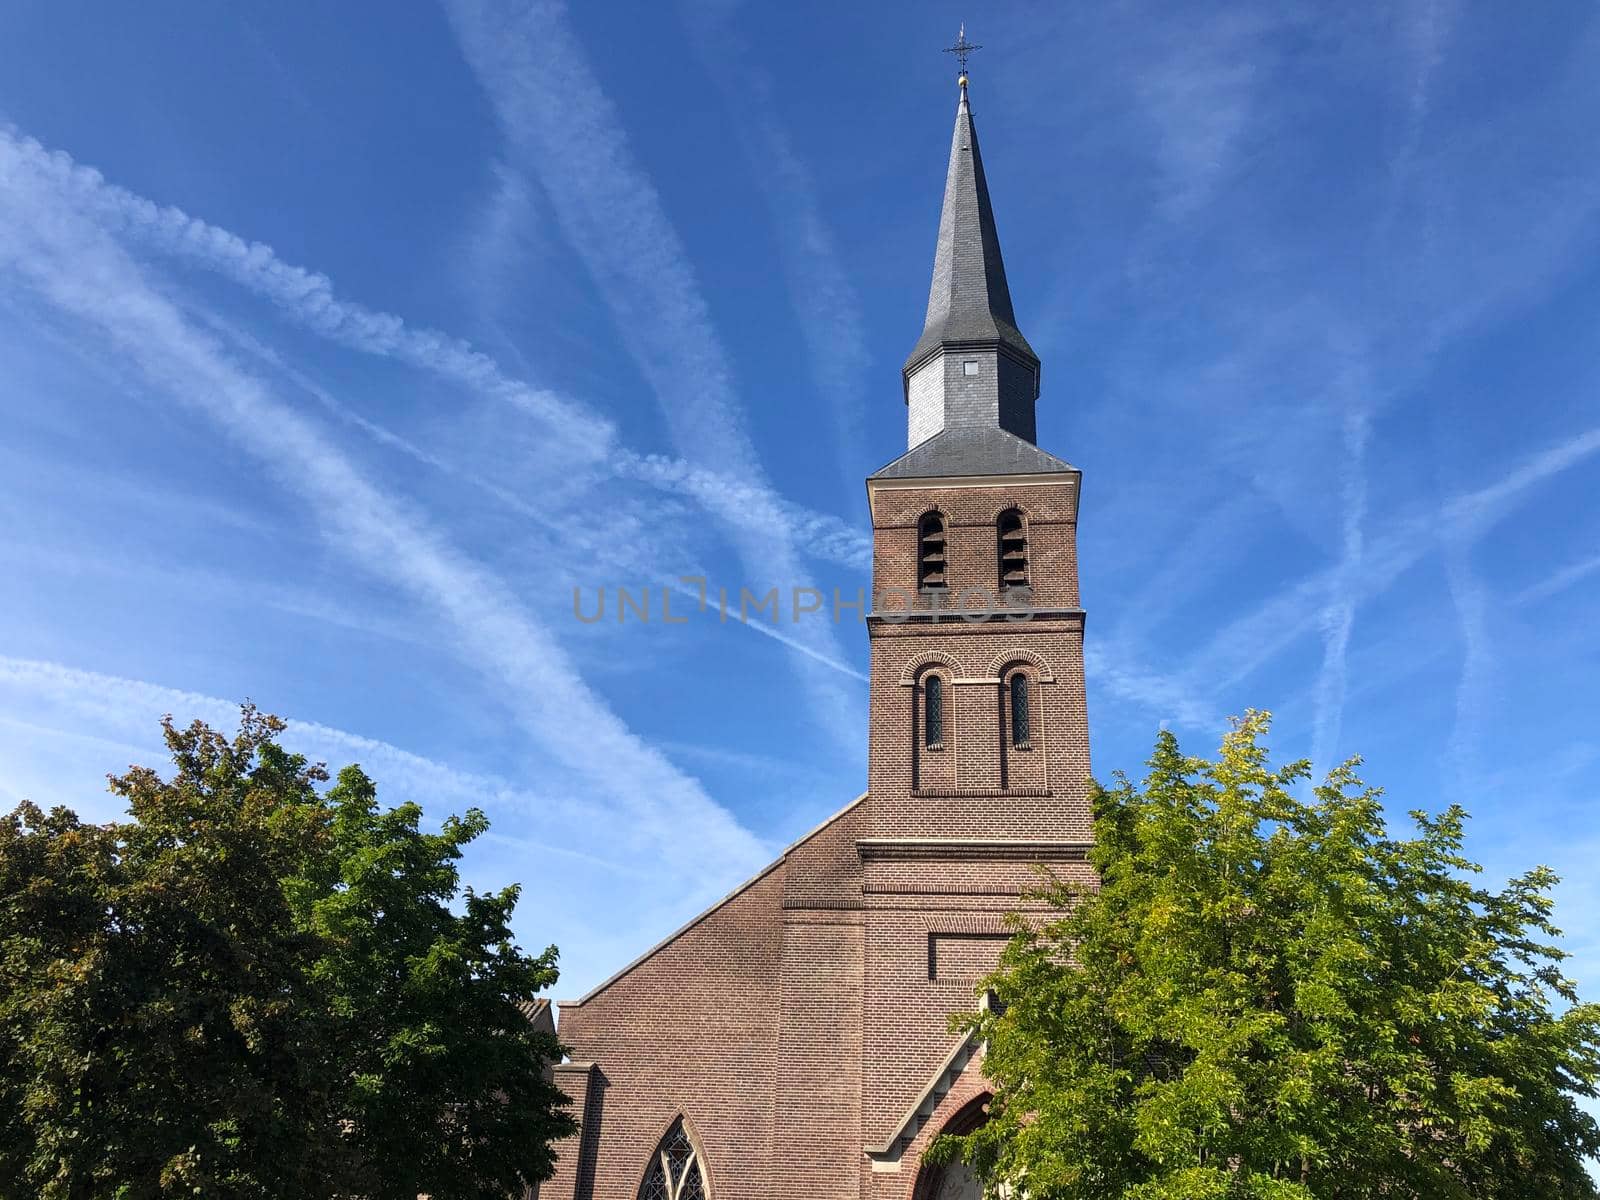 Sint Willibrordus church in Hengelo Gelderland, The Netherlands